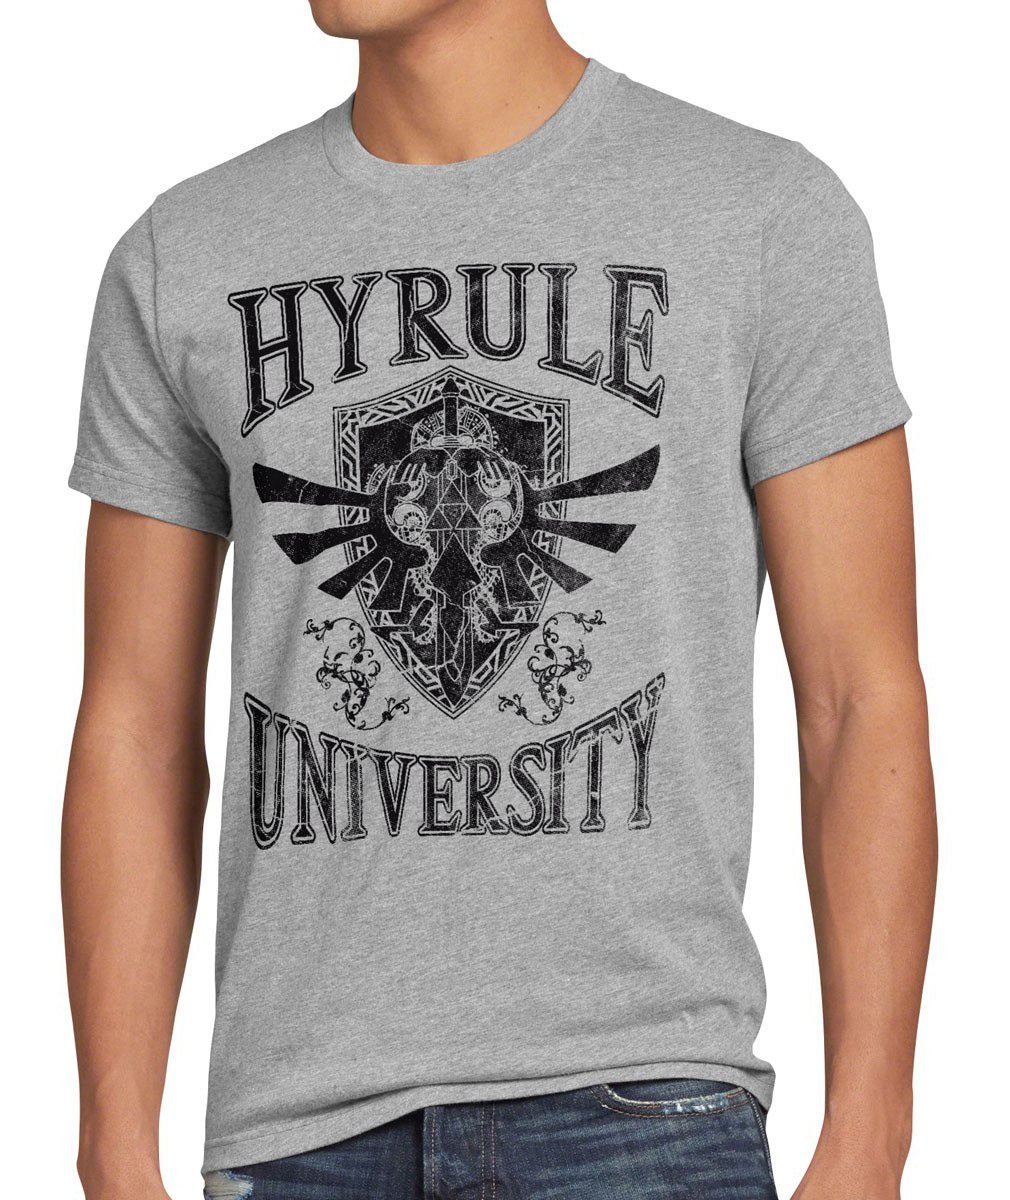 Eröffnungsverkauf style3 Print-Shirt Herren T-Shirt time Hyrule zelda ocarina switch grau link wii University waker past meliert